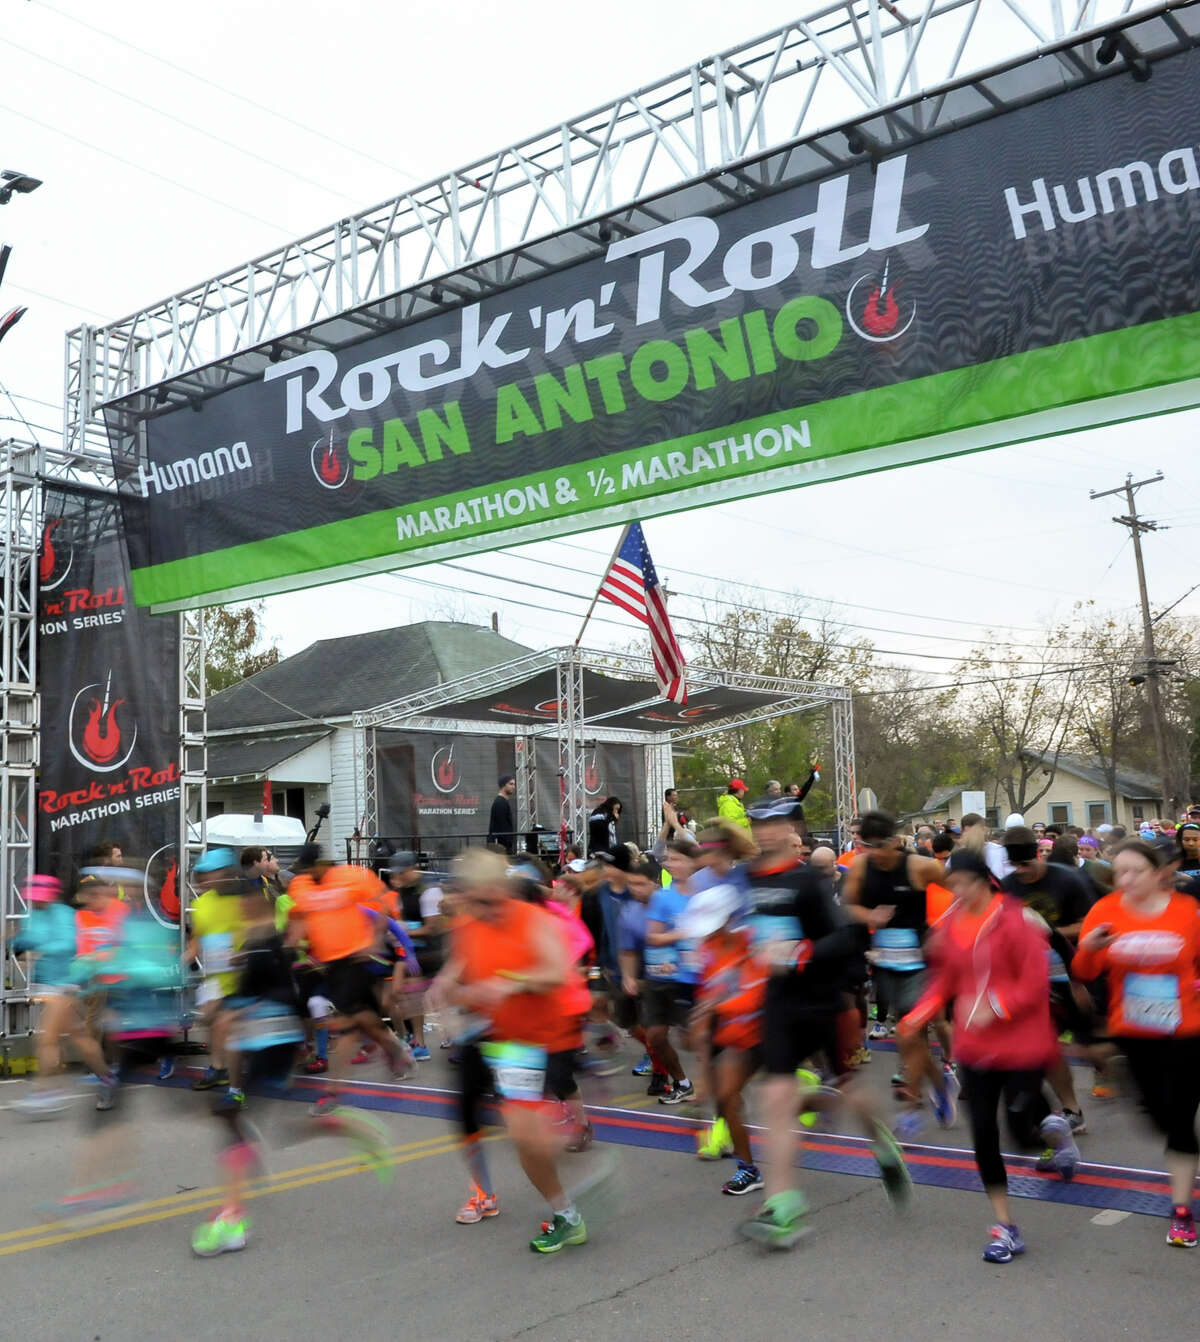 San Antonio rocks the marathon familystyle